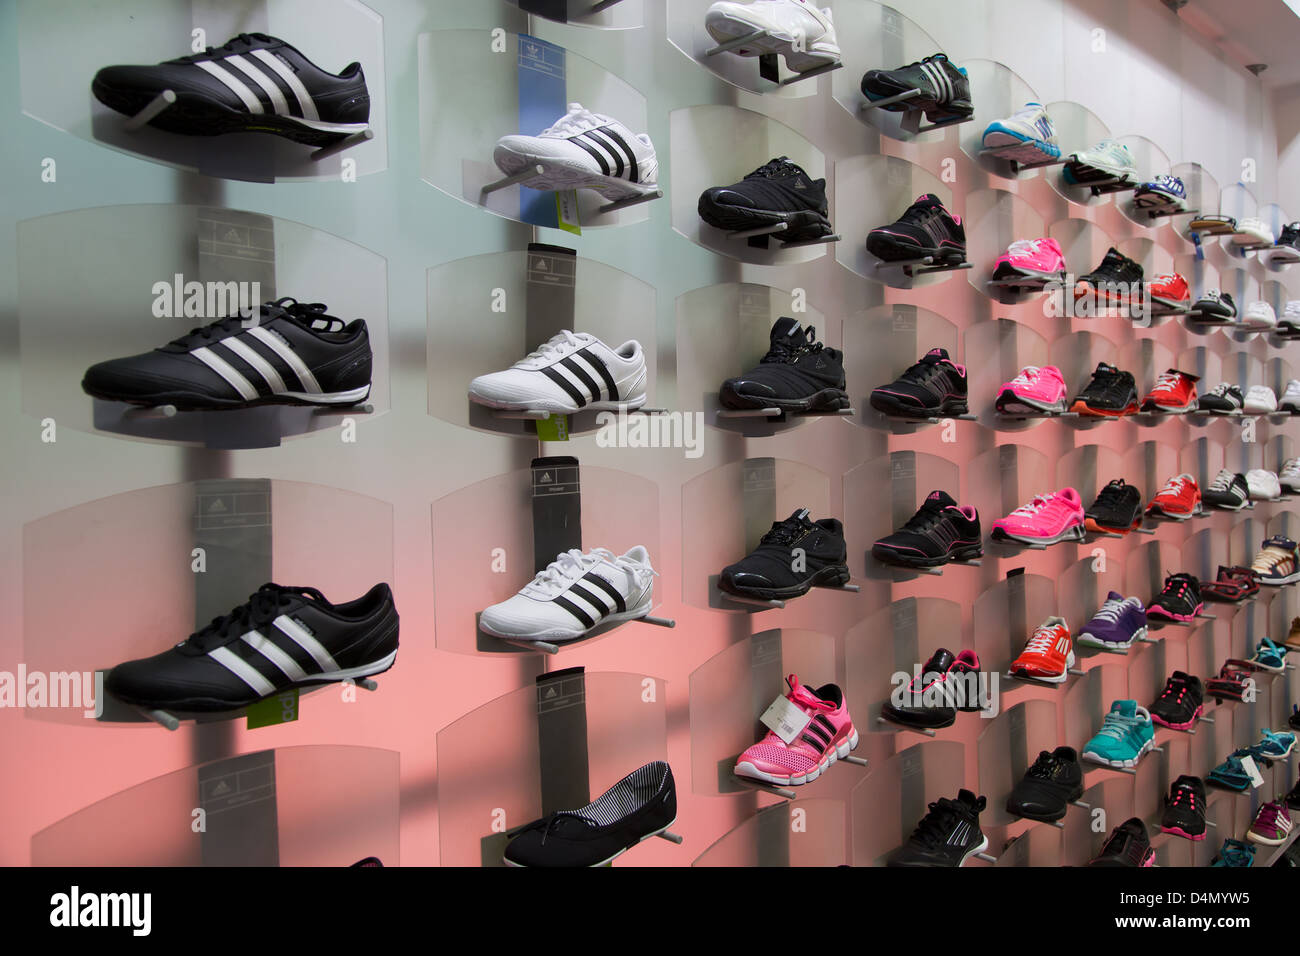 adidas shoes shop